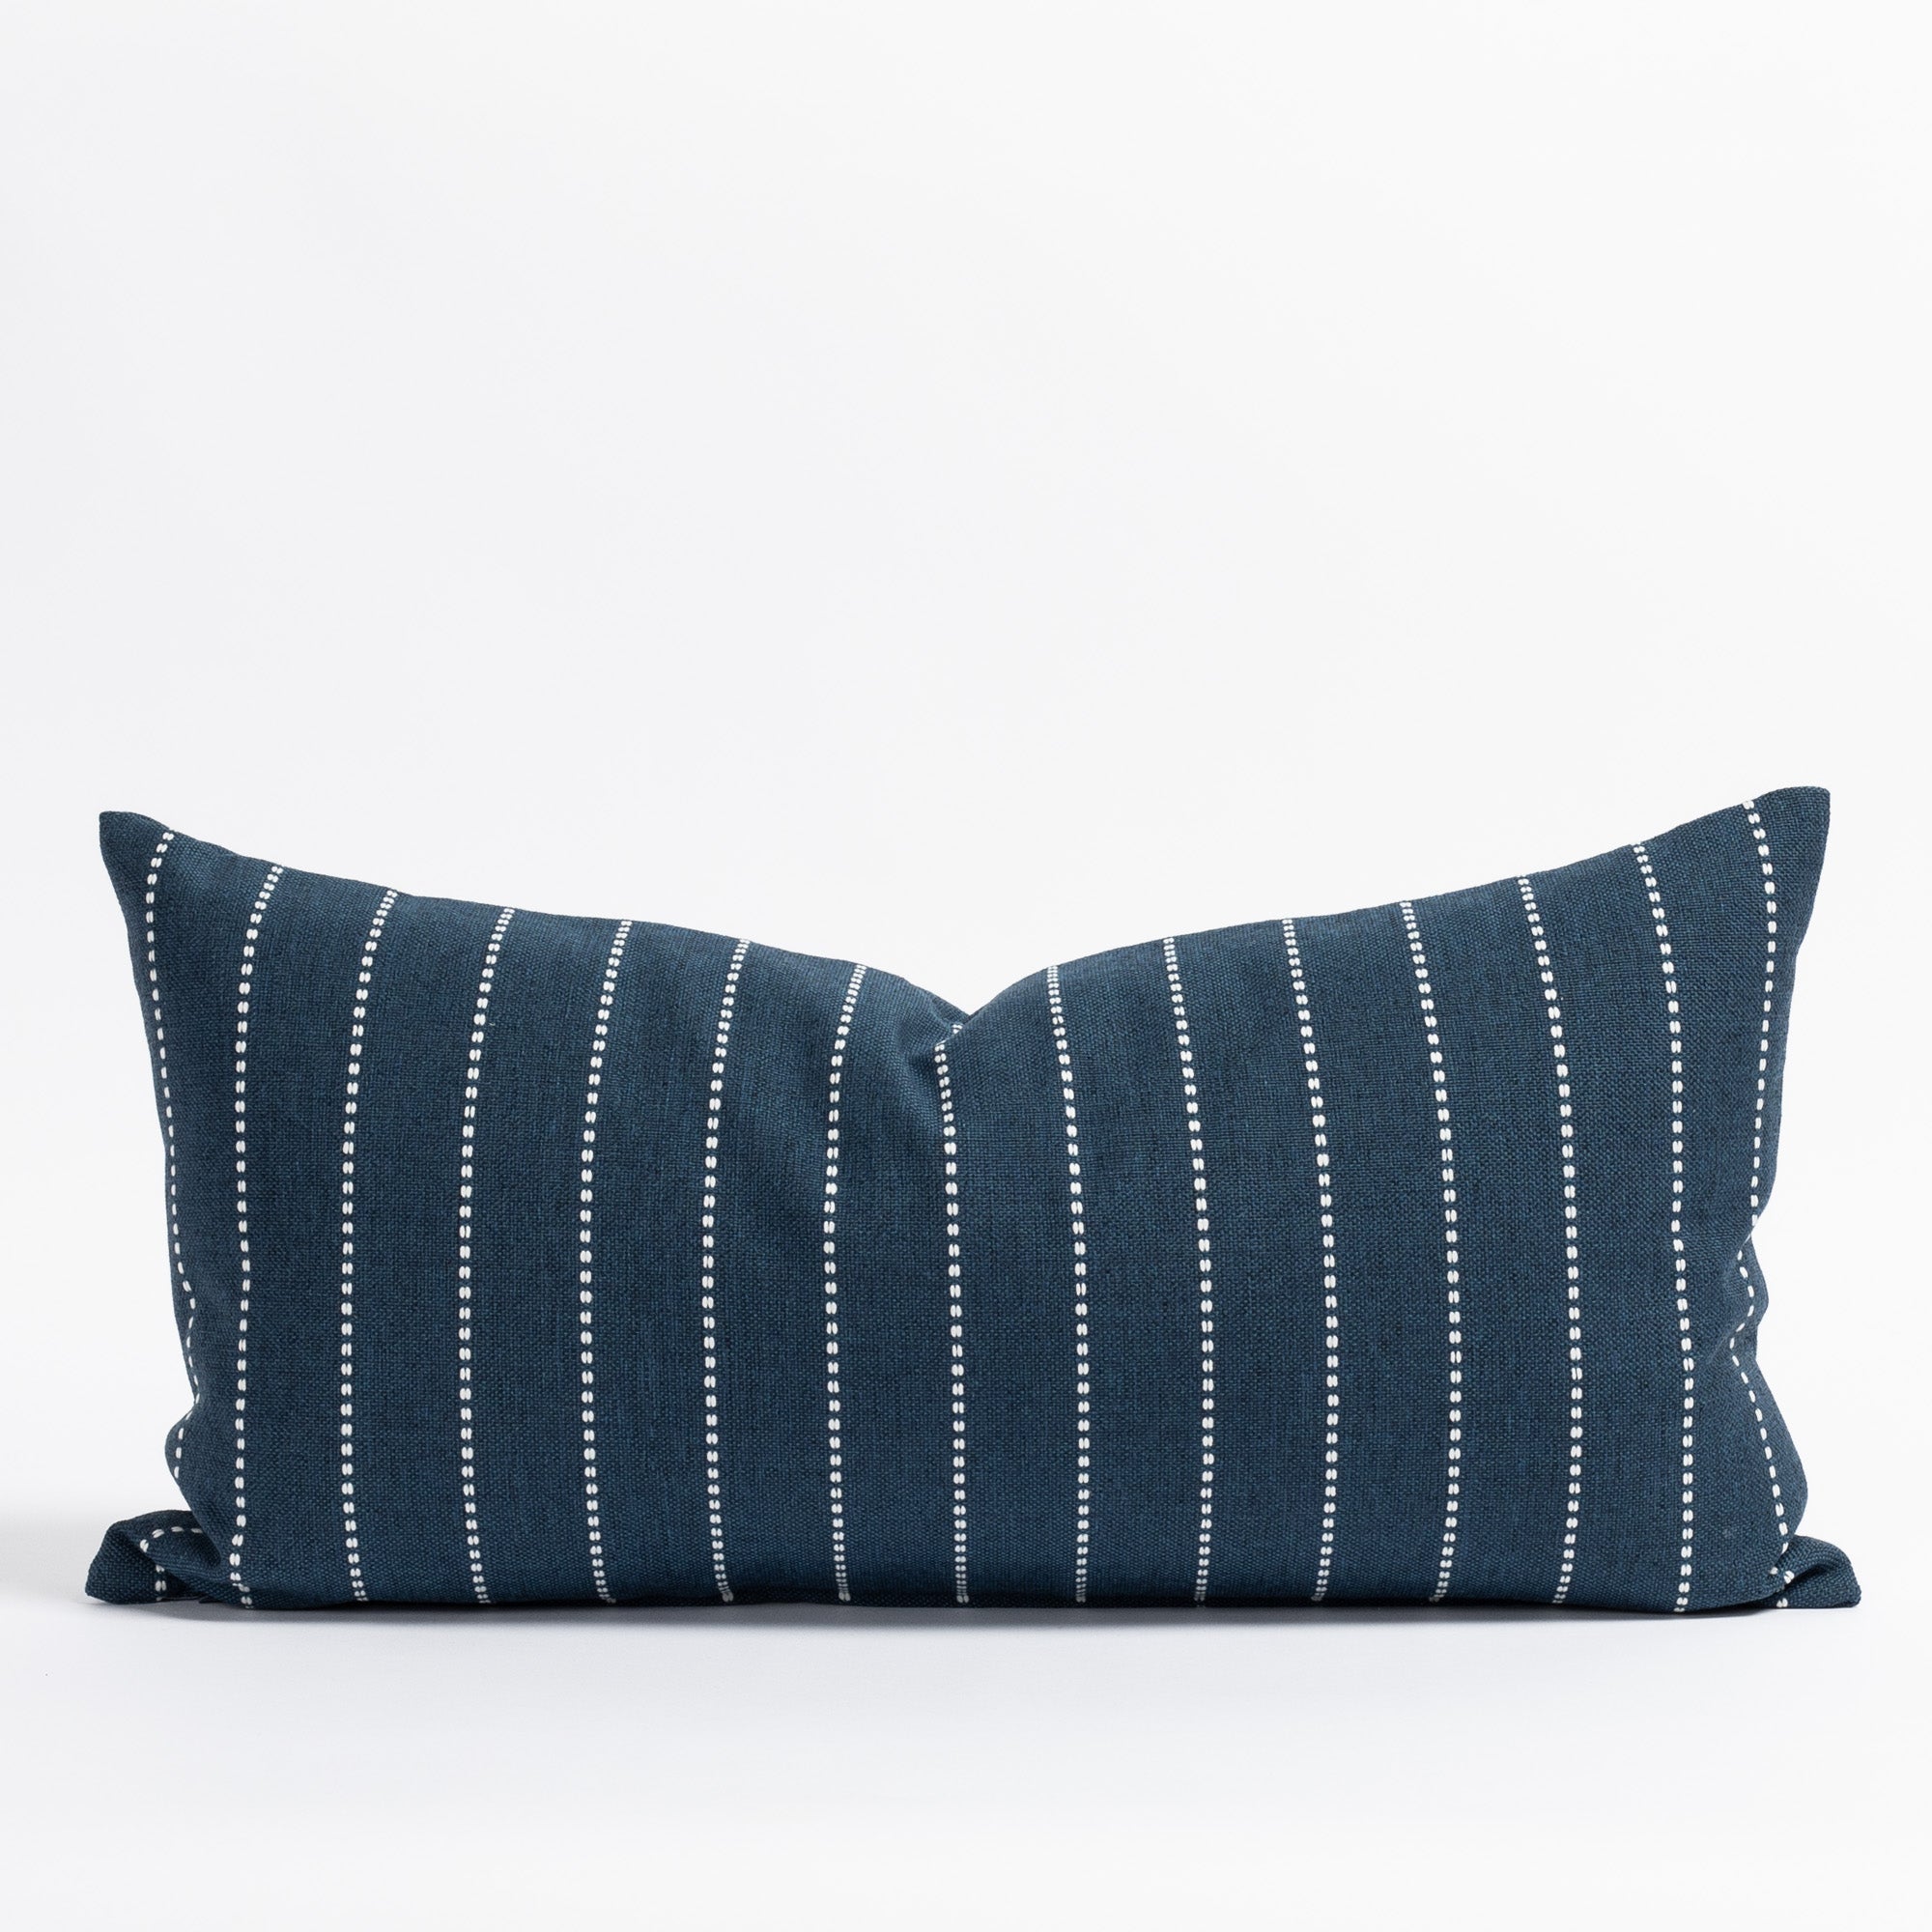 Fontana navy and white stripe 12x24 indoor outdoor lumbar pillow from Tonic Living